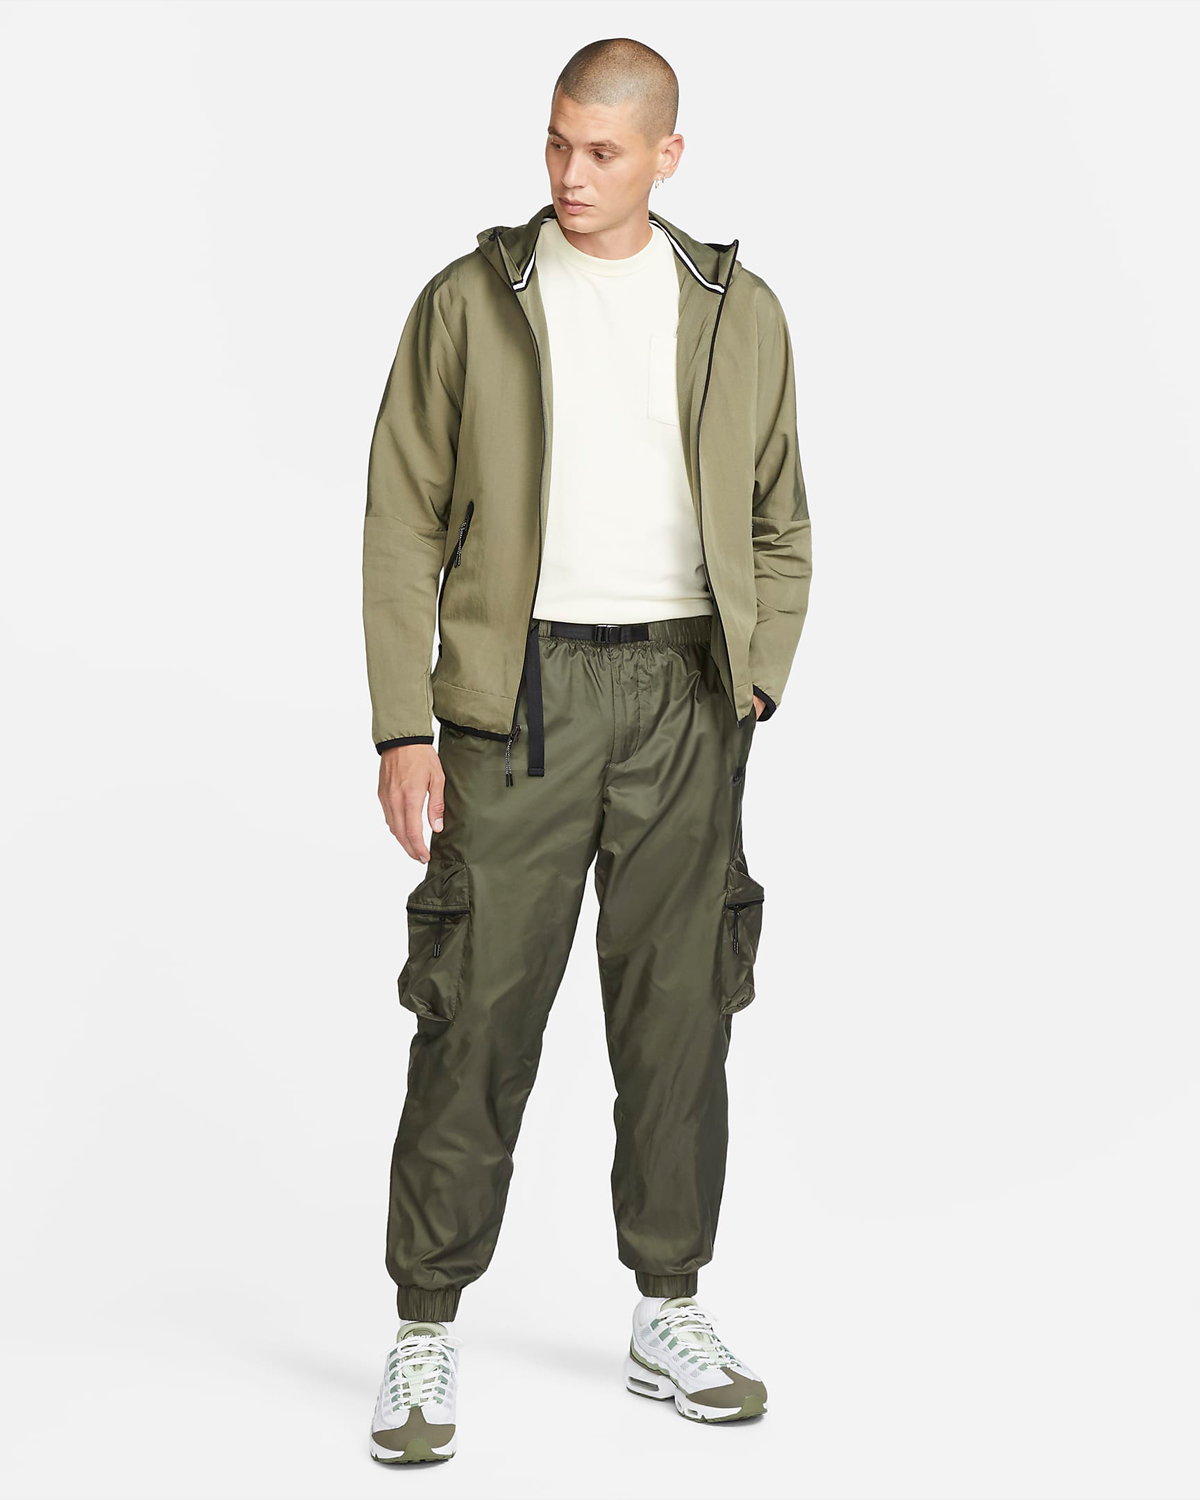 Nike-Tech-Lined-Woven-Pants-Cargo-Khaki-Outfit